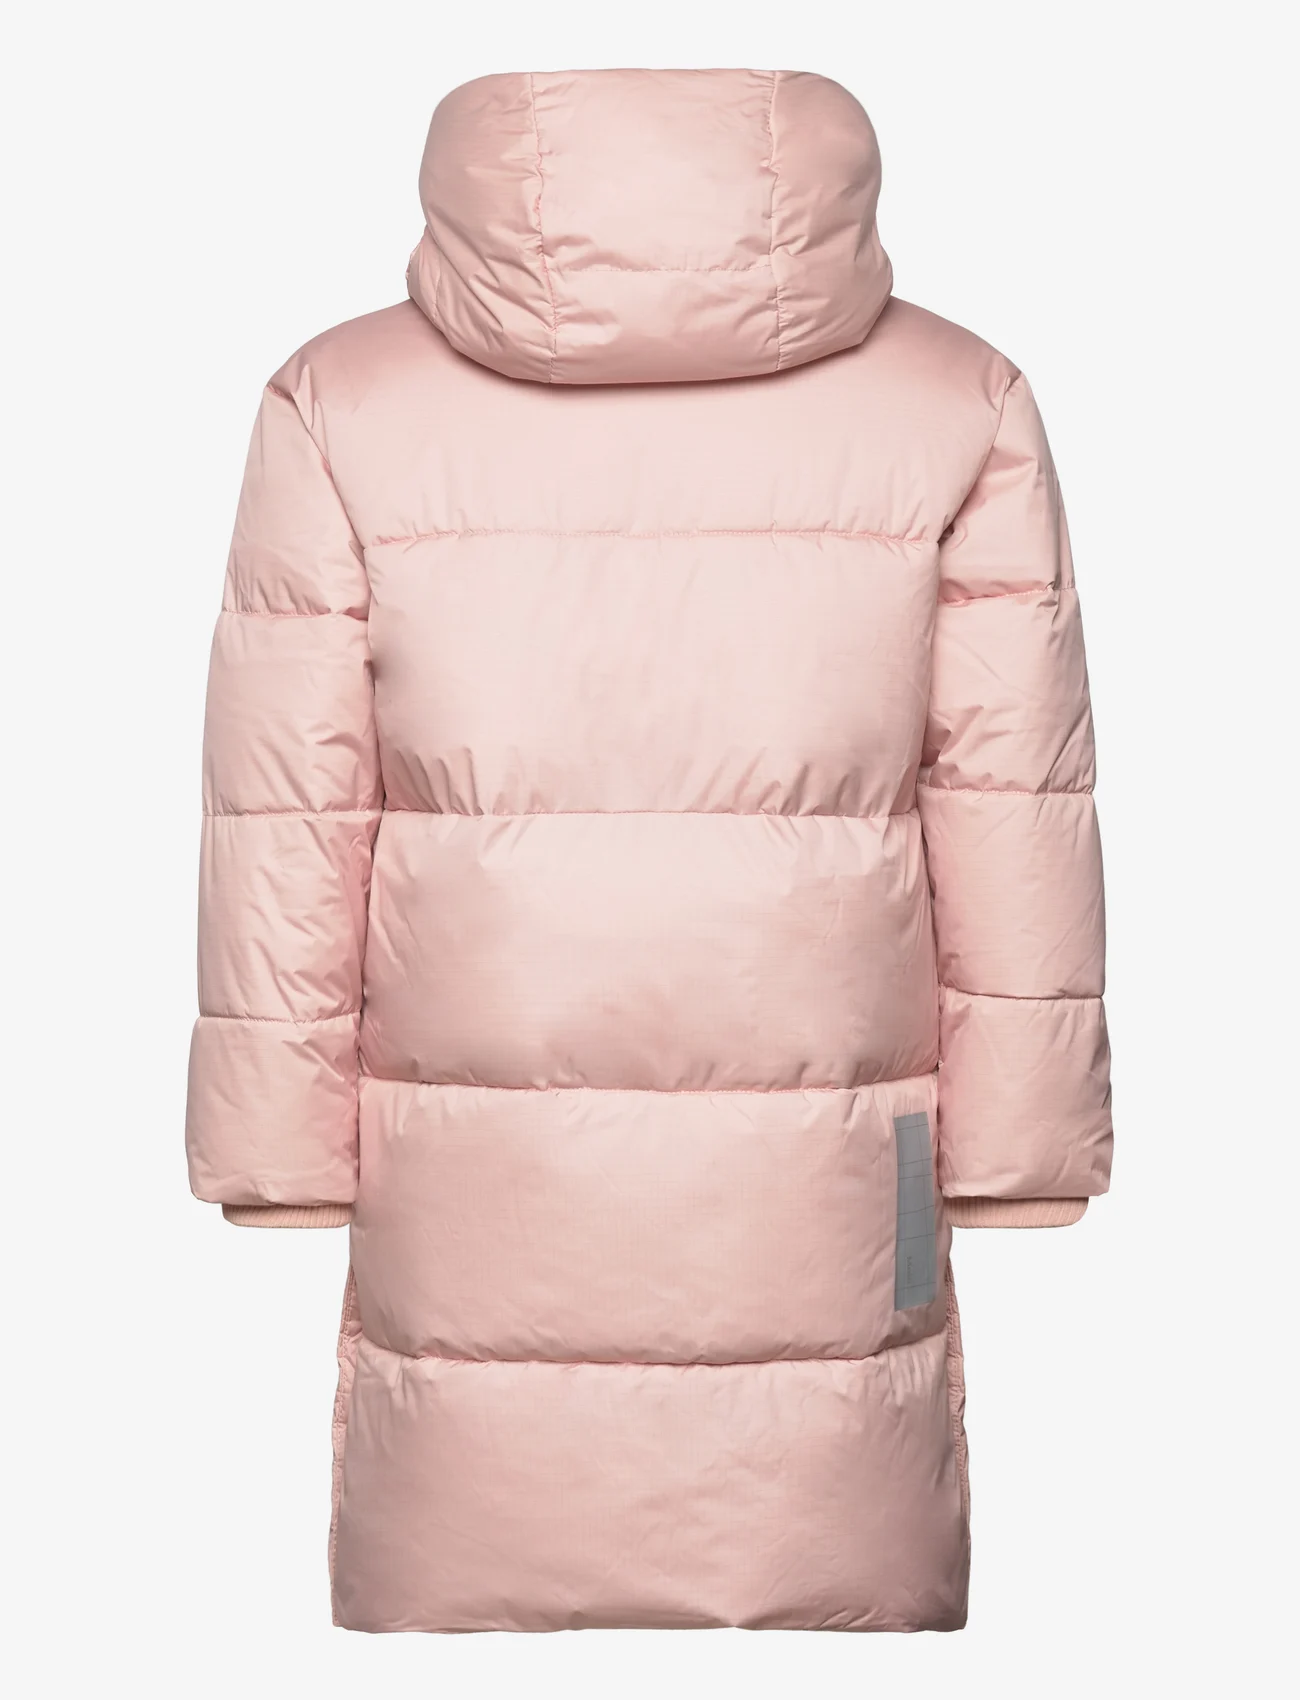 Molo - Harper - winter jackets - petal blush - 1